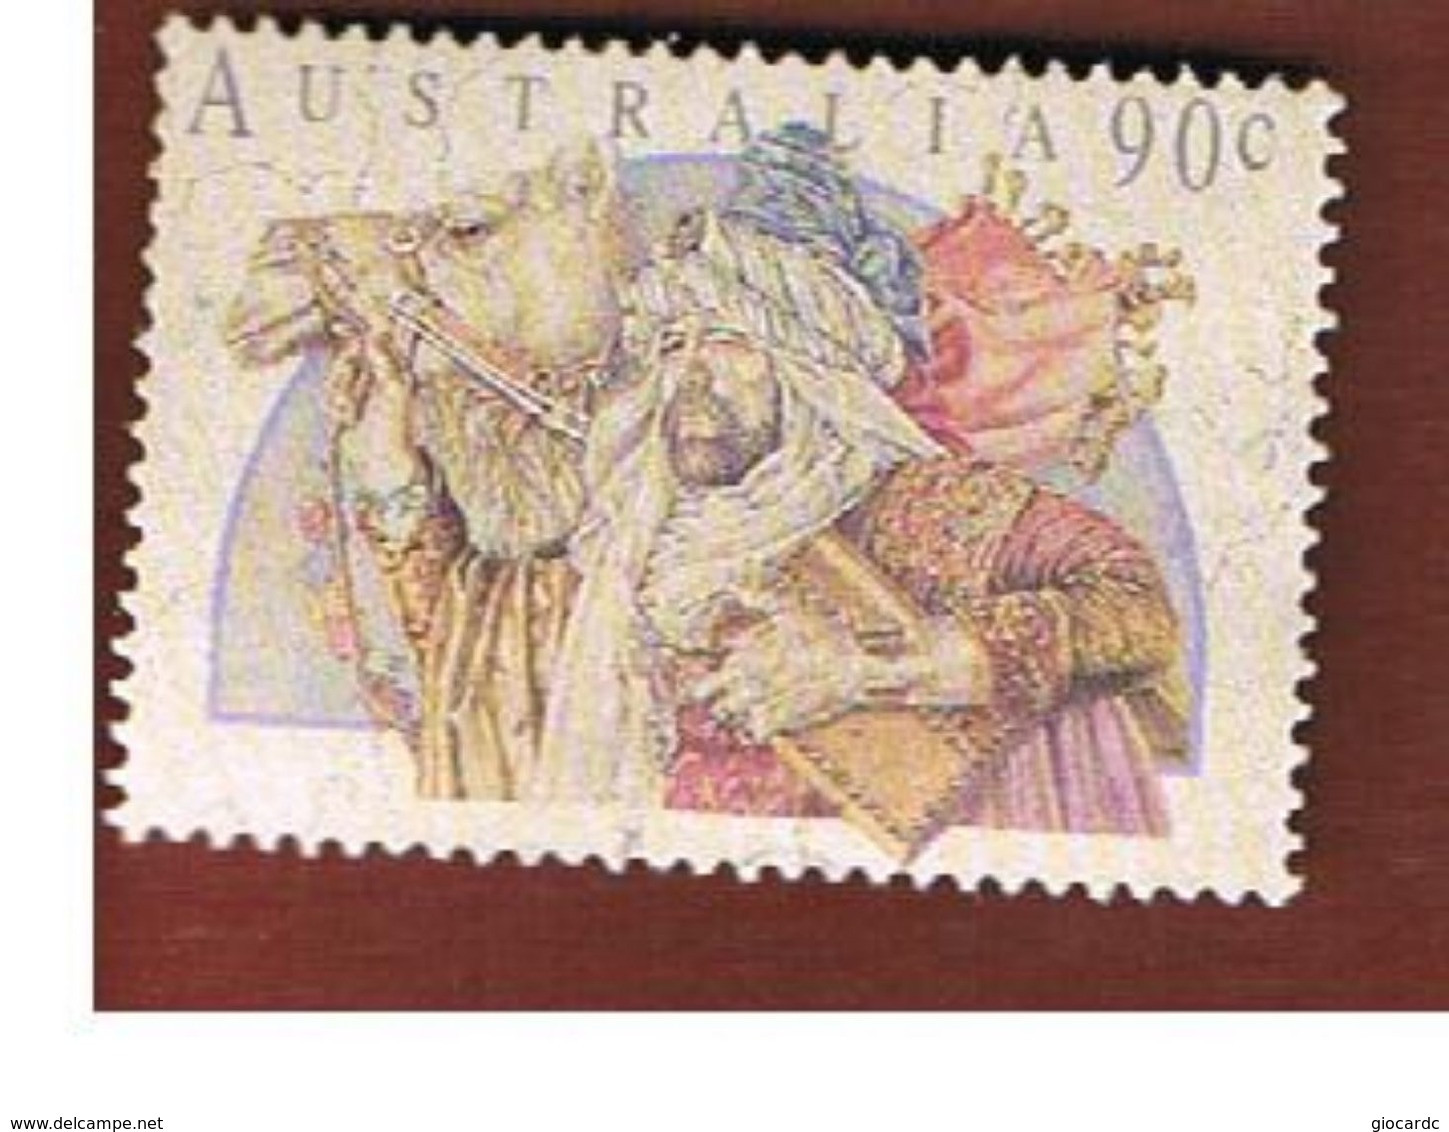 AUSTRALIA  -  SG 1311  -      1991   CHRISTMAS    -       USED - Used Stamps